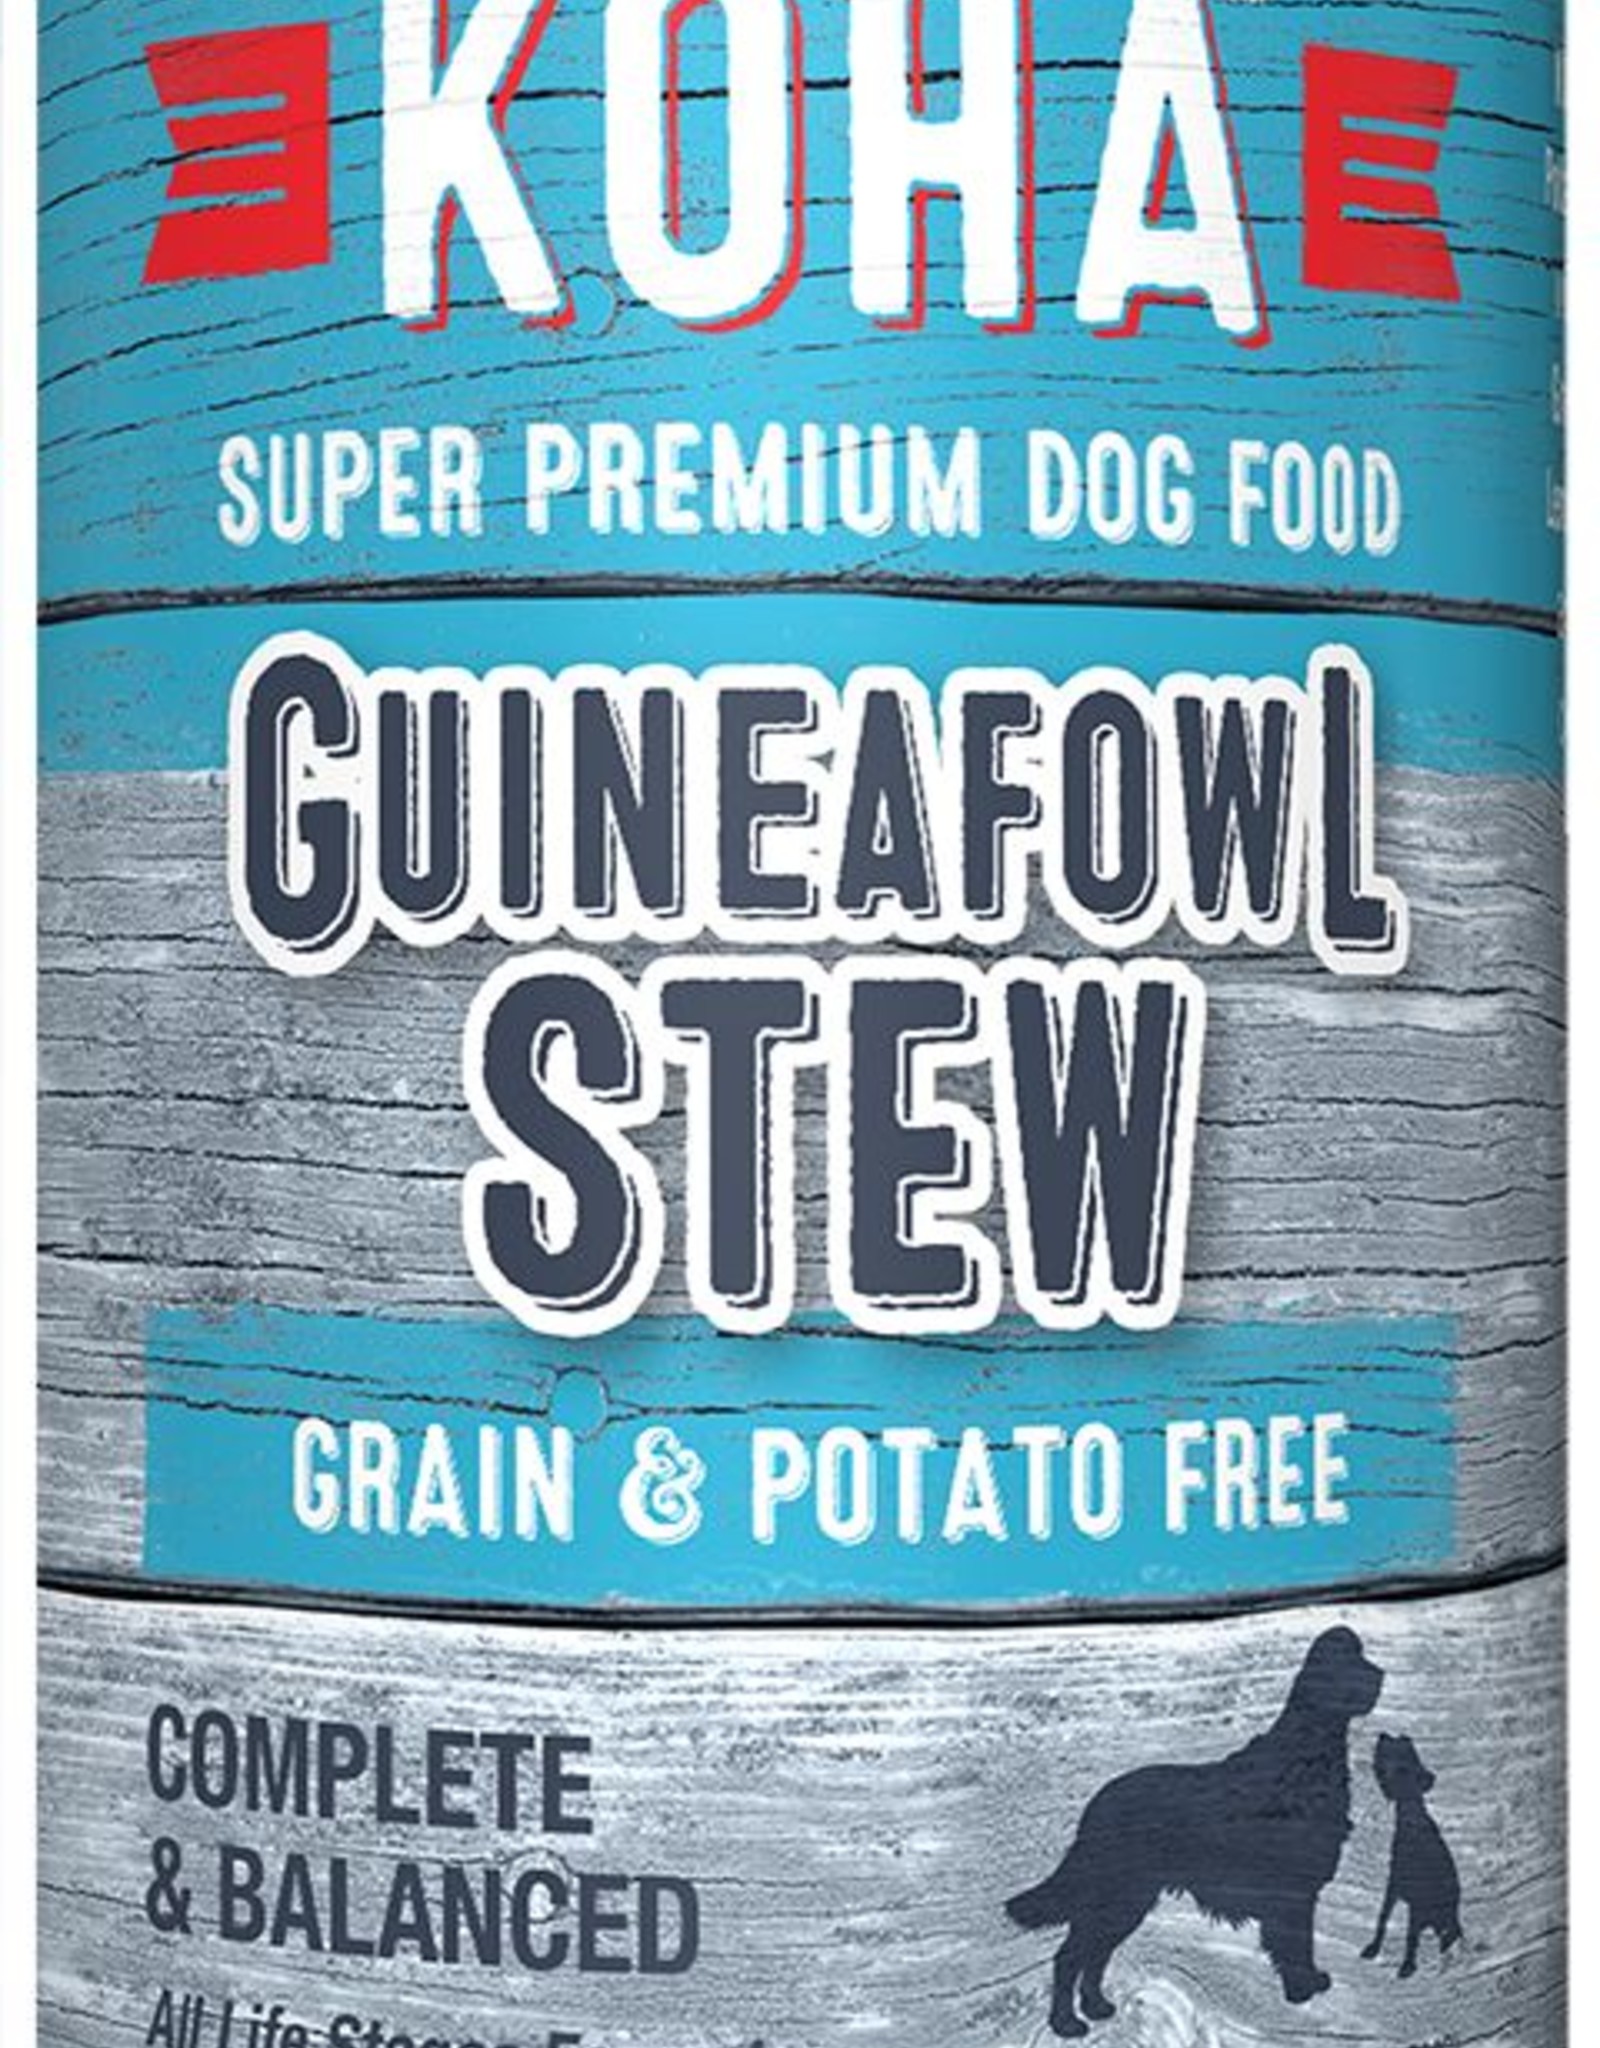 Koha Koha Guineafowl Stew for Dogs 12.7oz